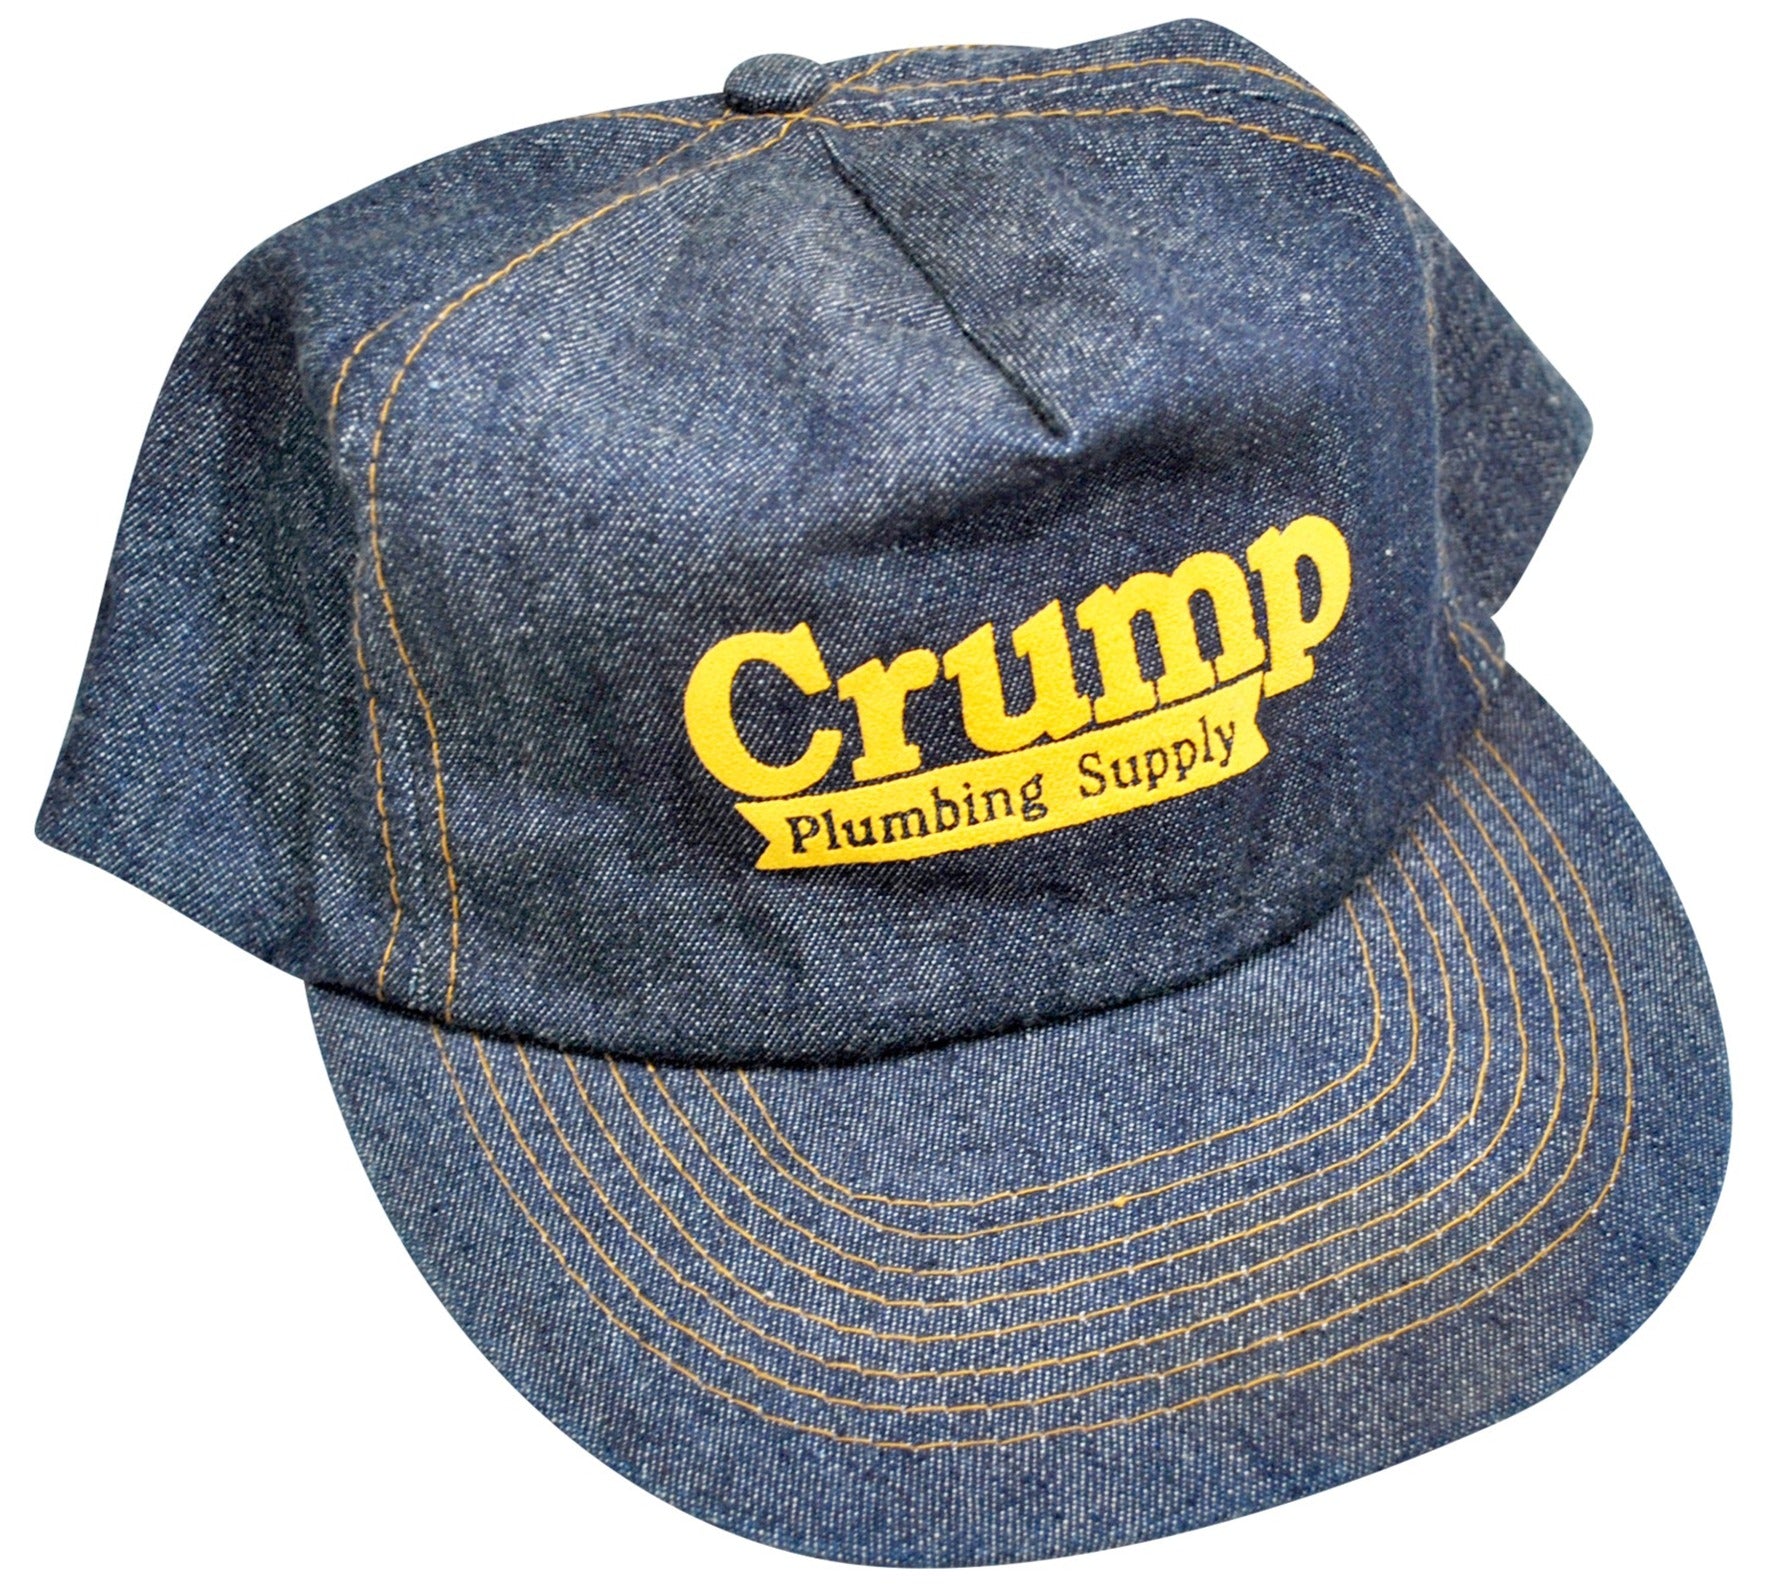 Vintage Crump Plumbing Supply Snapback – Yesterday's Attic